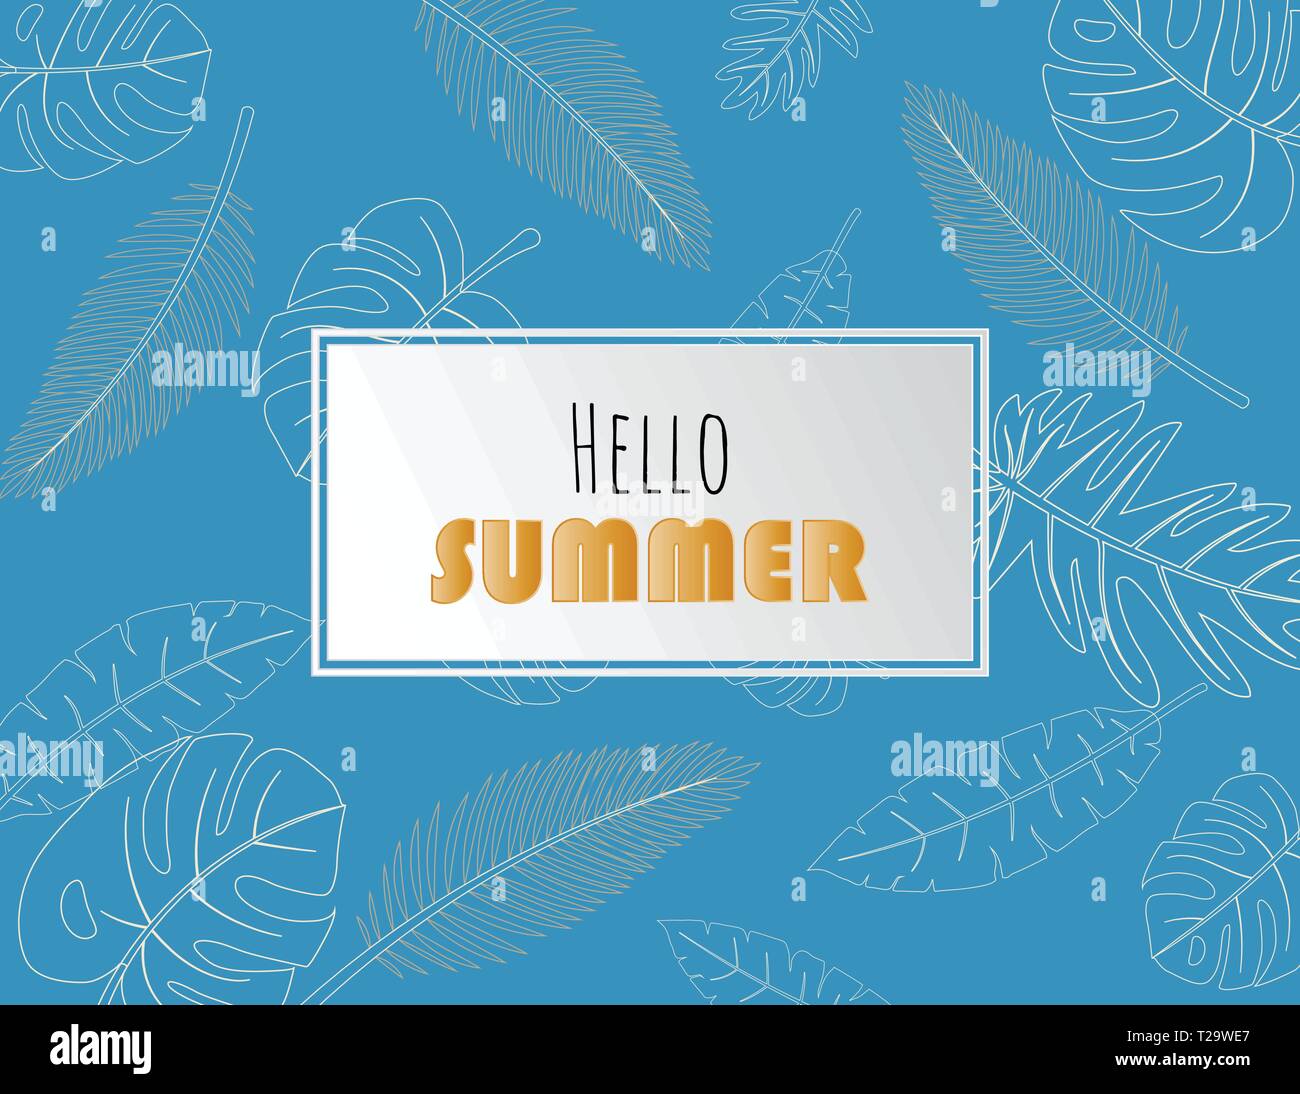 tumblr summer banners